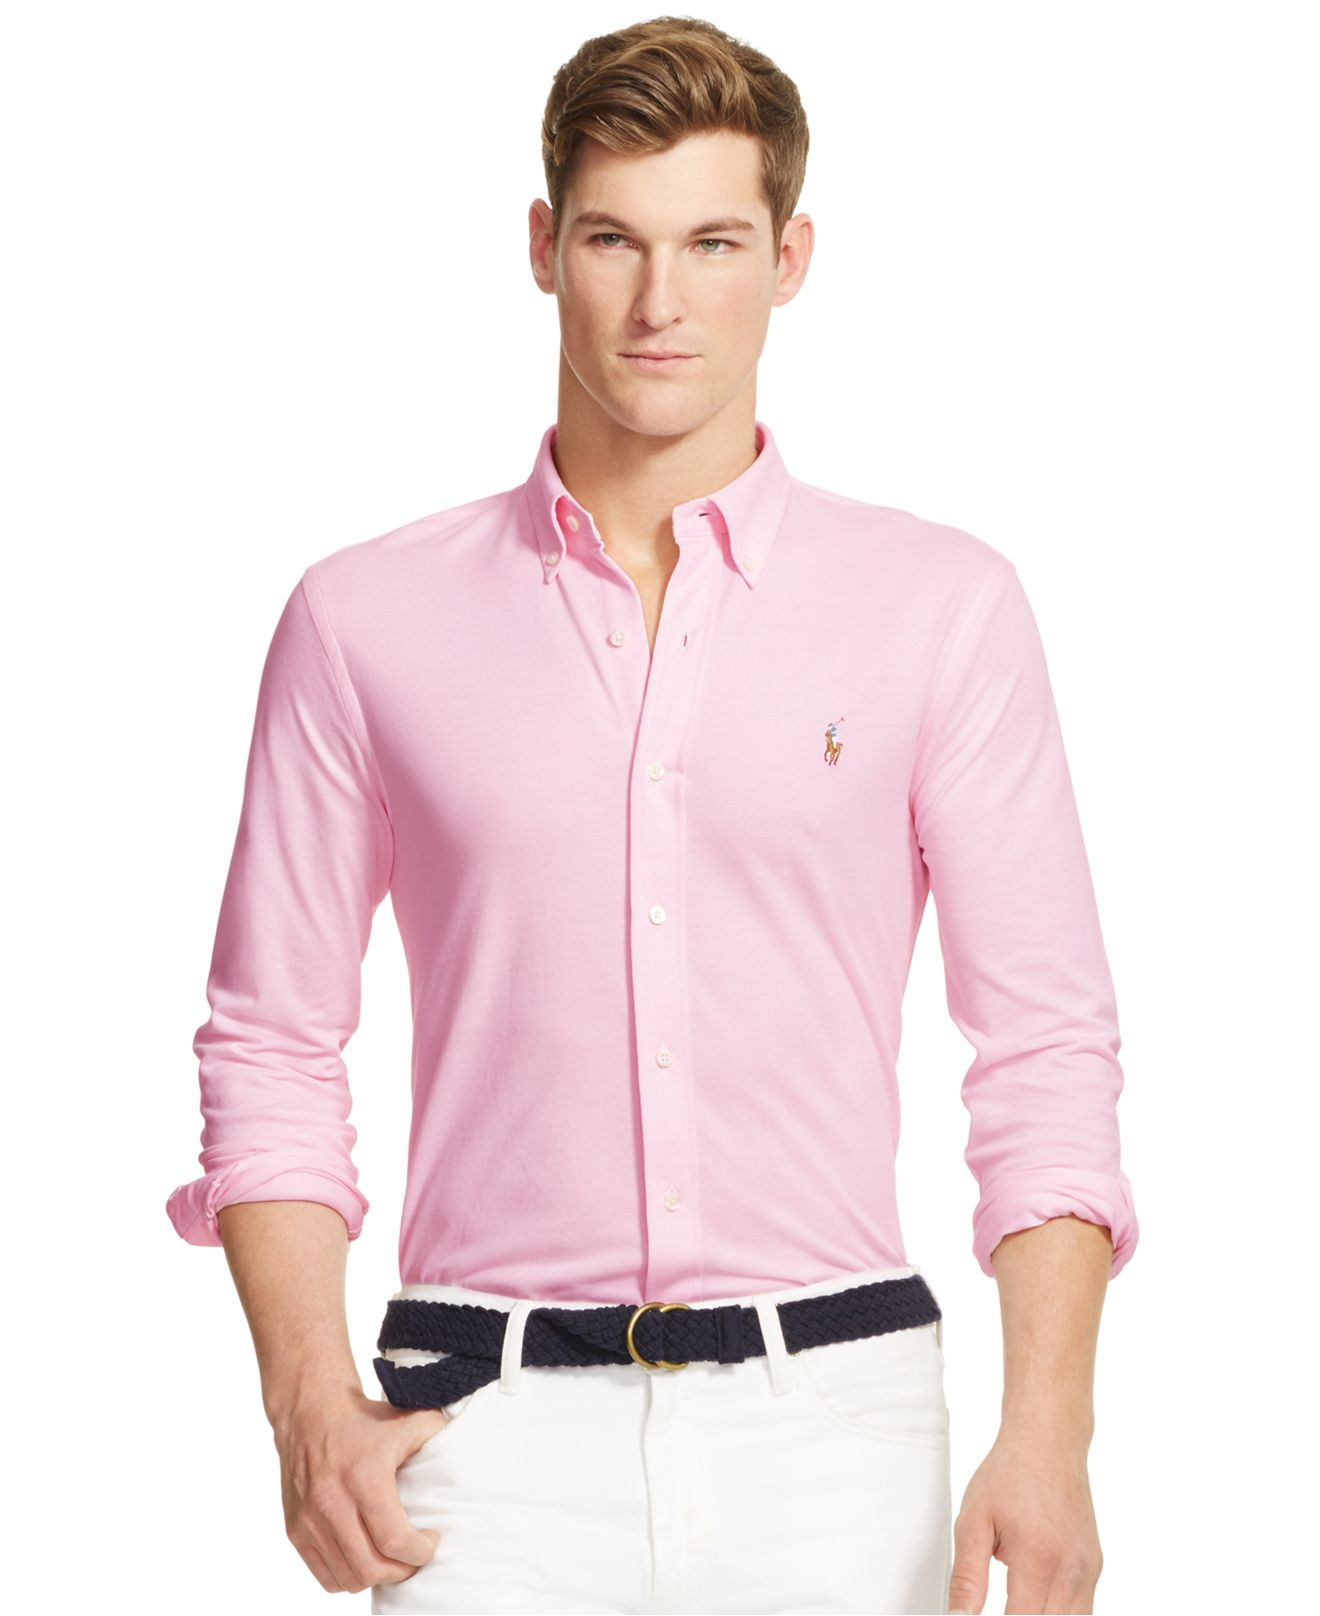 pink polo oxford shirt